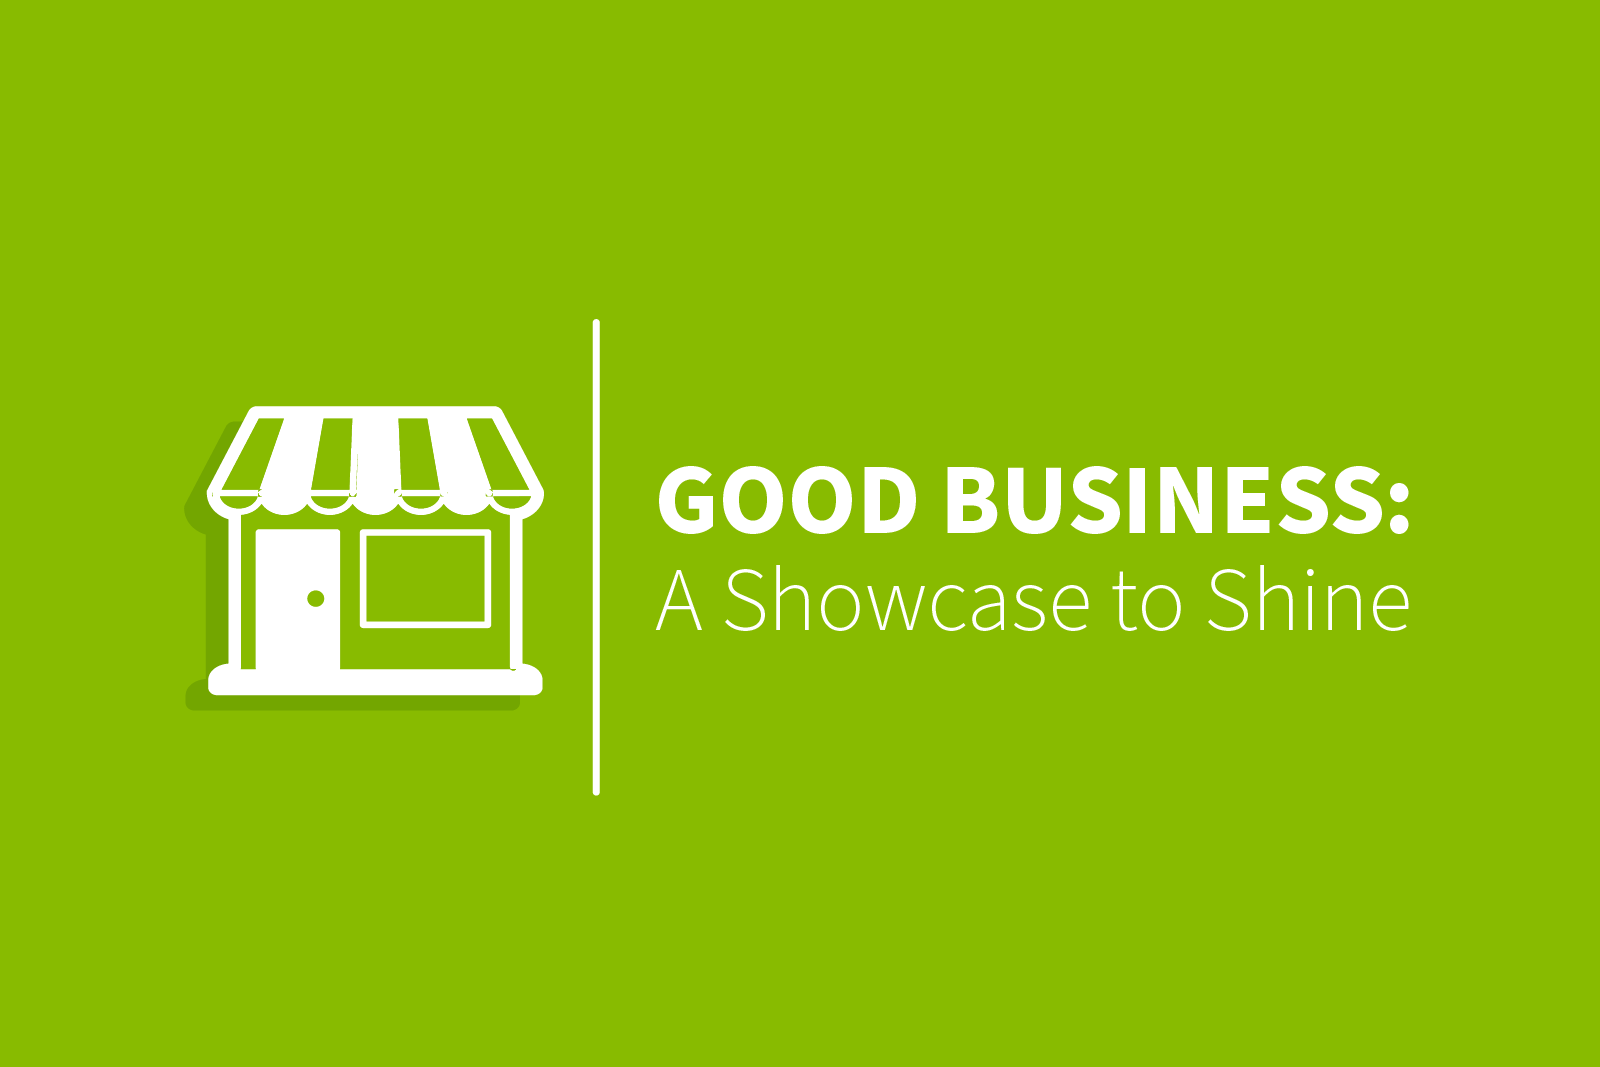 Good Business: A Showcase to Shine